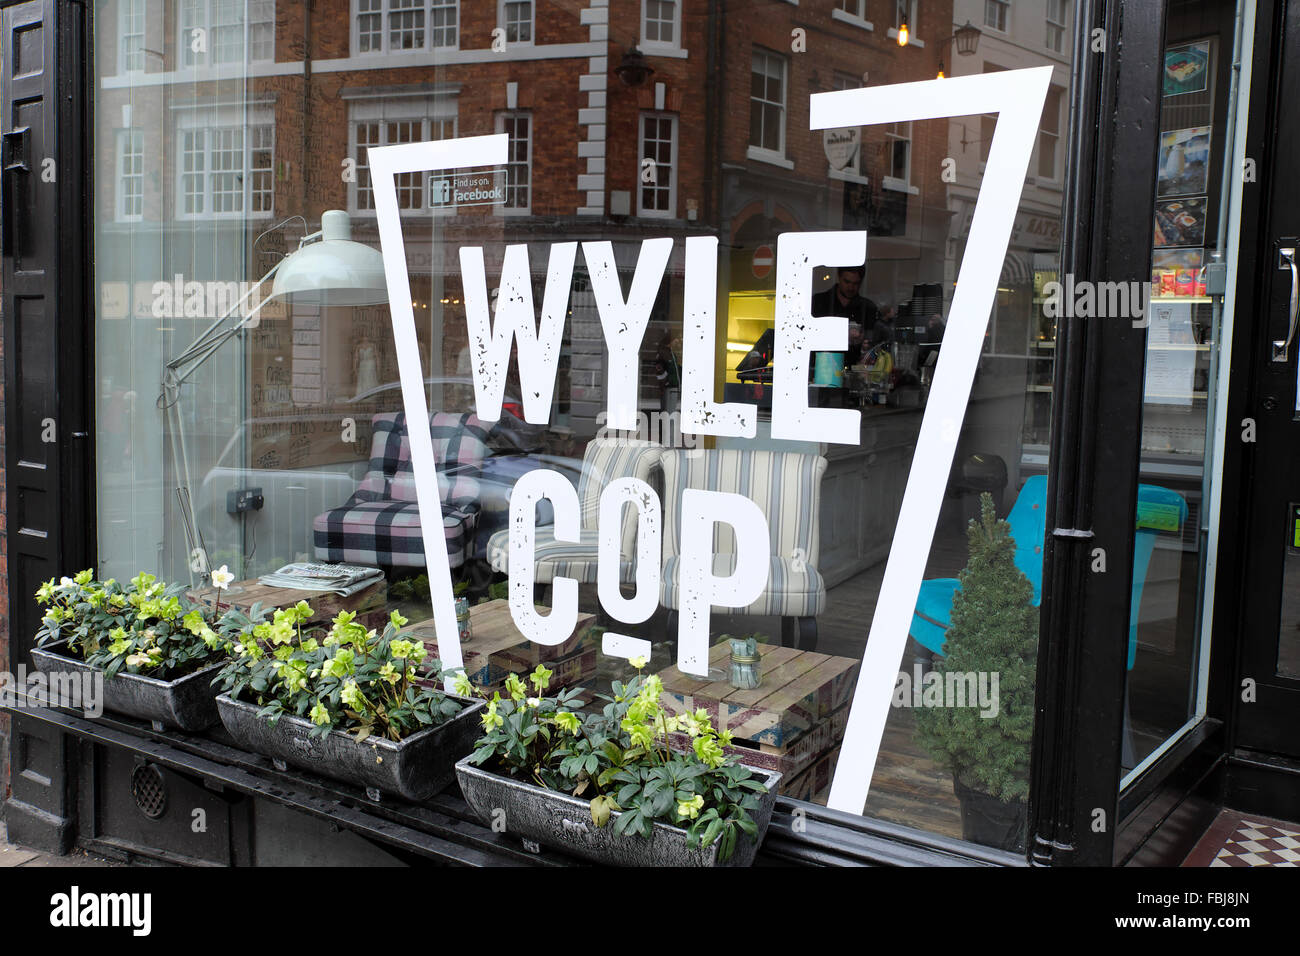 Wyle Cop sign on interiors shop in Shrewsbury, Shropshire England UK  KATHY DEWITT Stock Photo